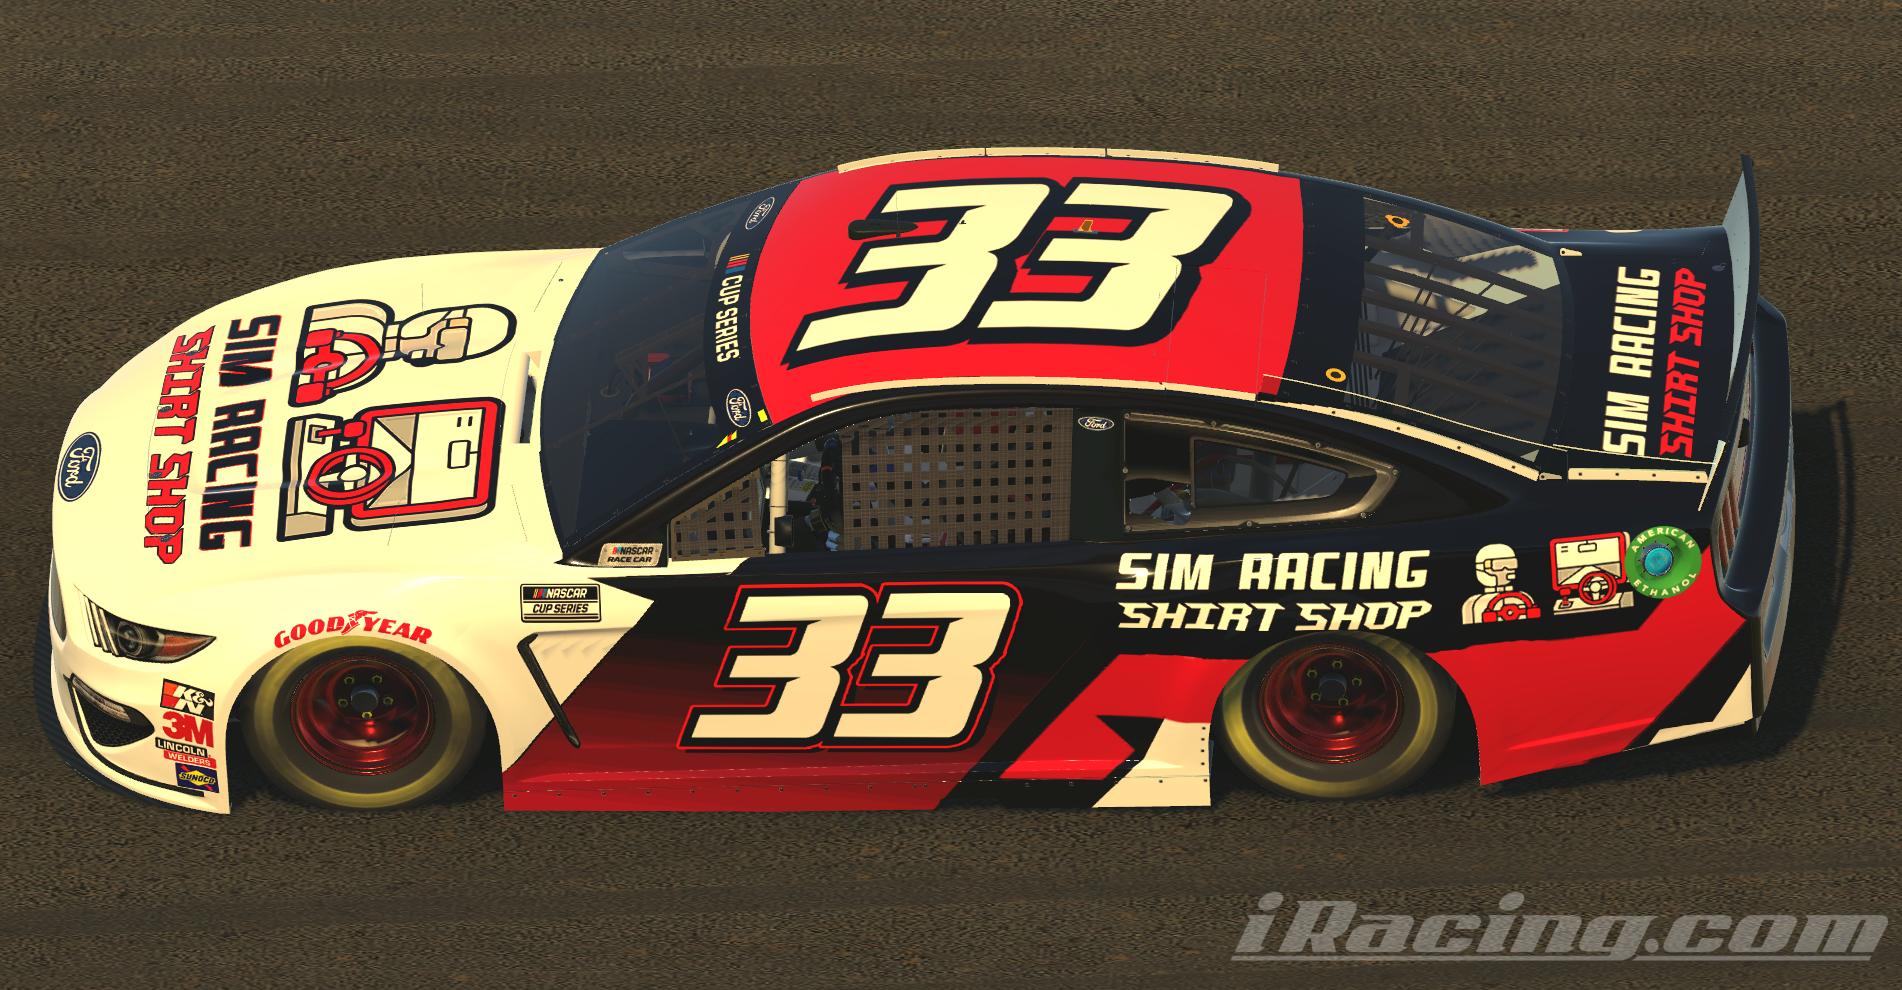 Preview of Sim Racing Shirt Shop Cup Car (Custom #) by Chris T J.